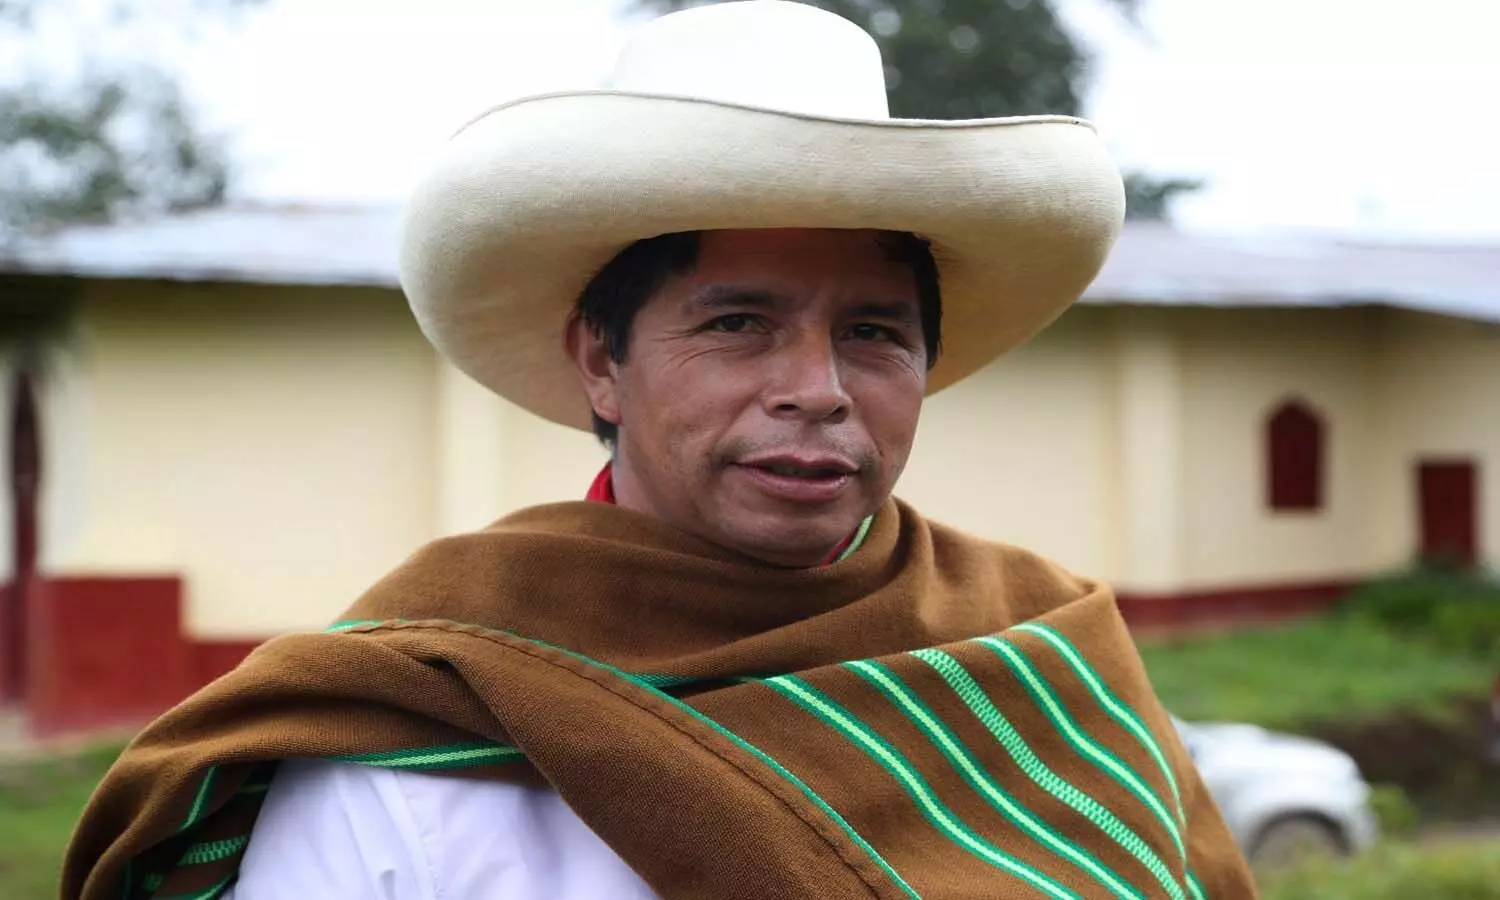 Pedro Castileo, a schoolteacher in Peru, was elected the new president